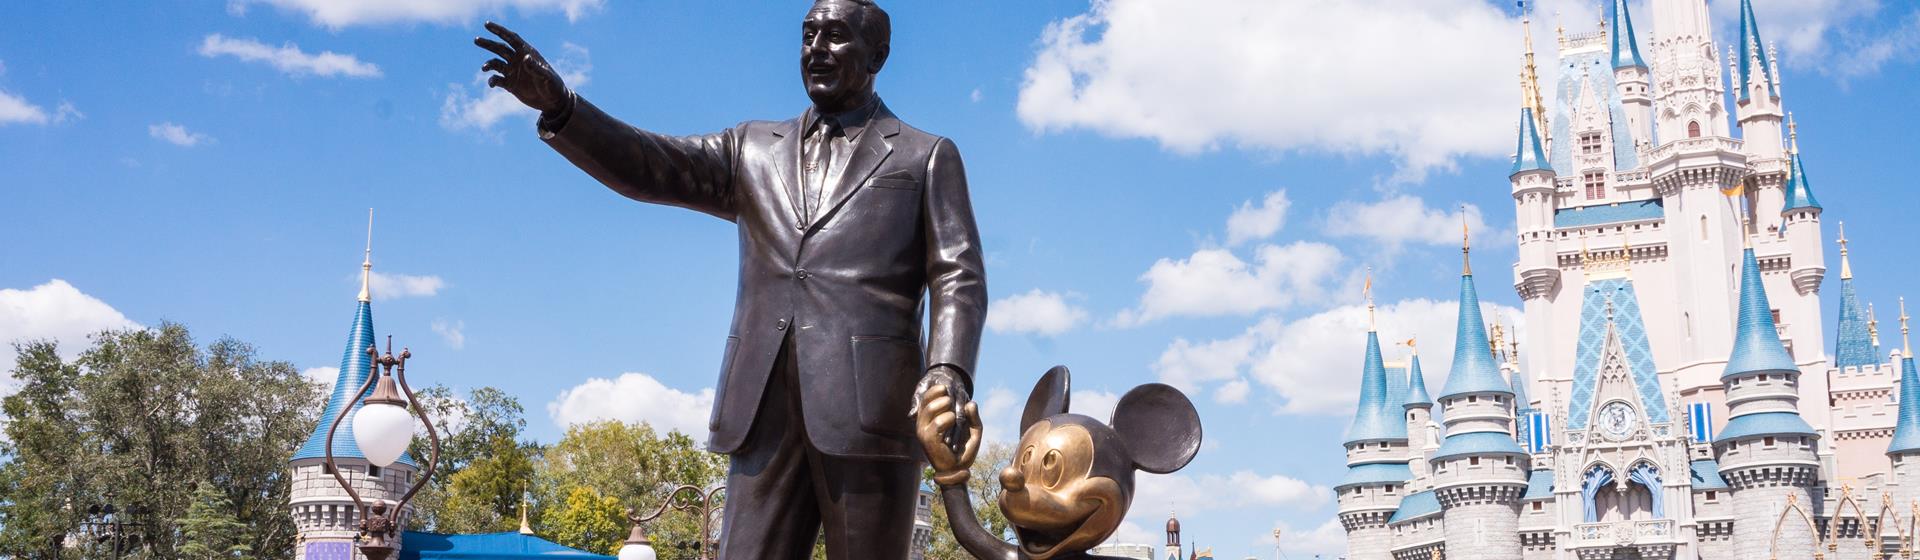 Walt Disney World Orlando Resort Holidays & Tickets